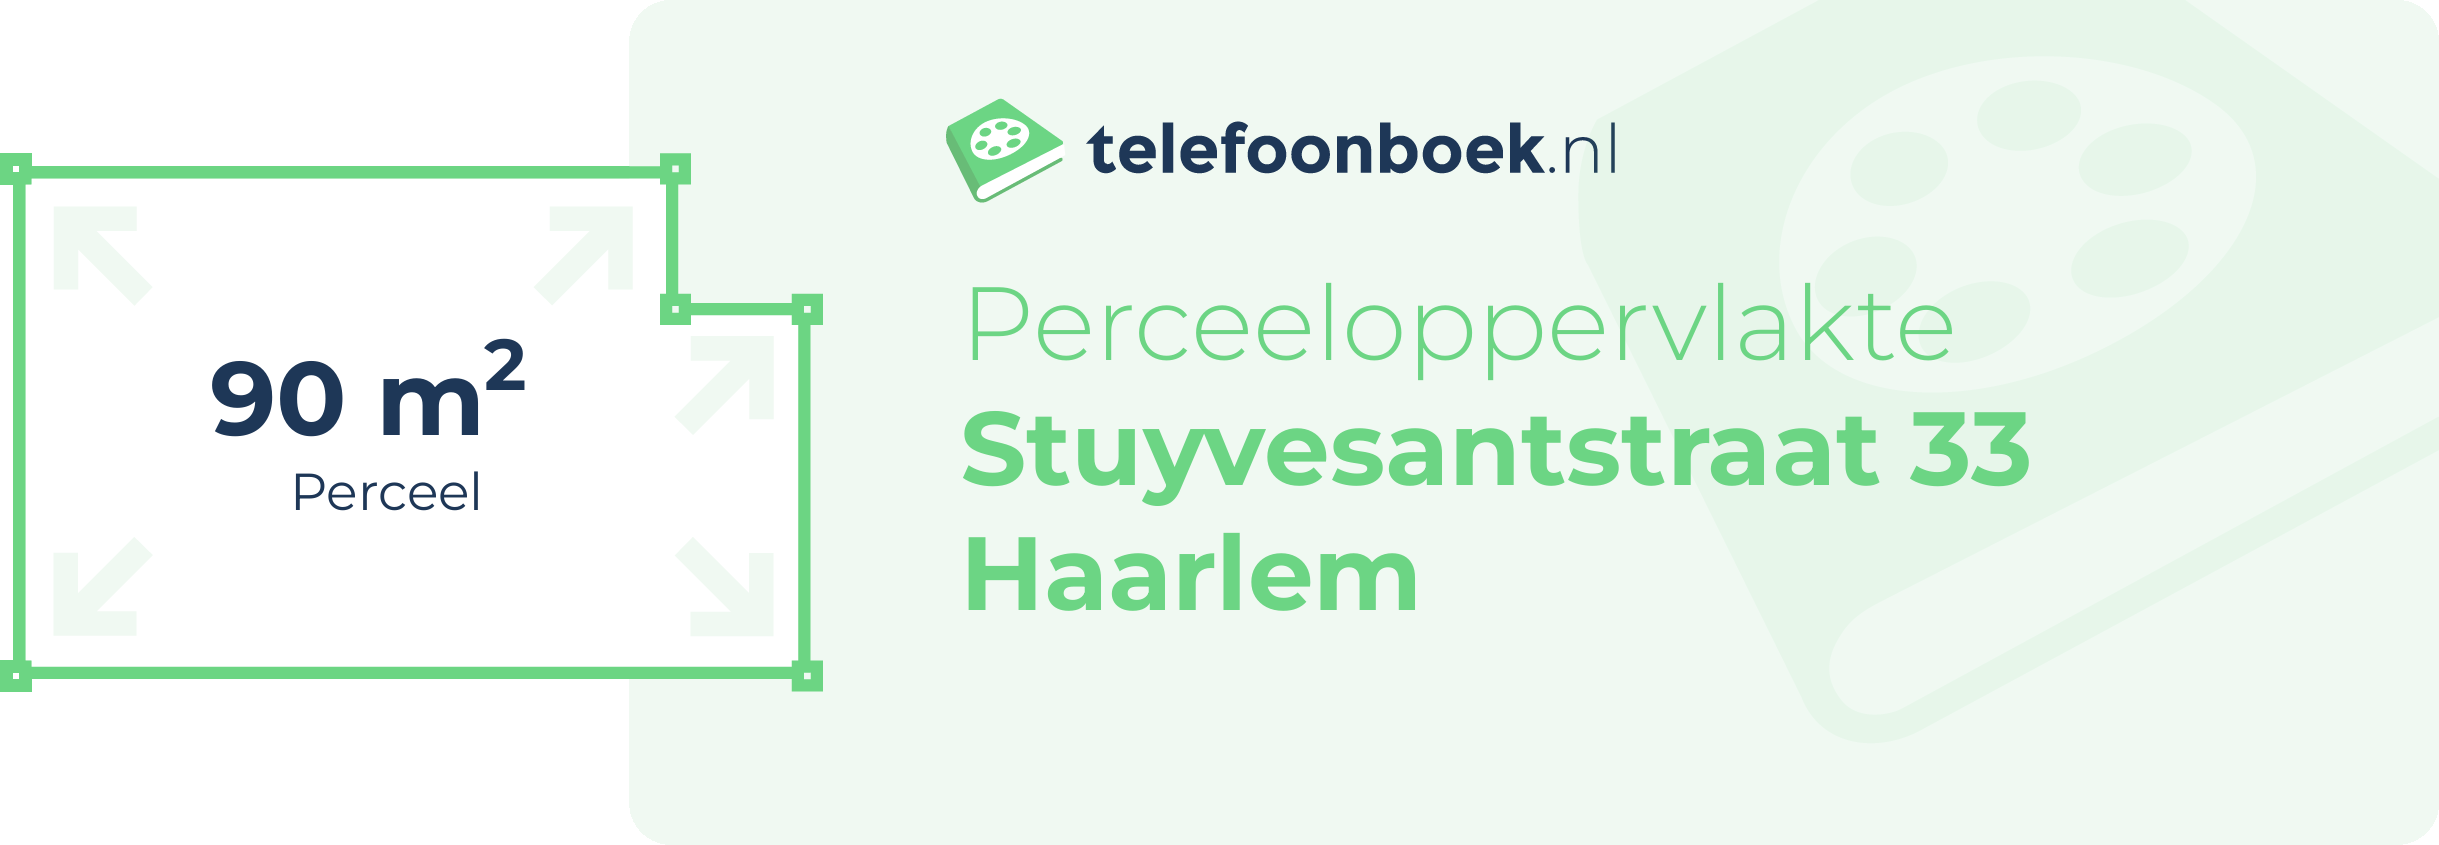 Perceeloppervlakte Stuyvesantstraat 33 Haarlem